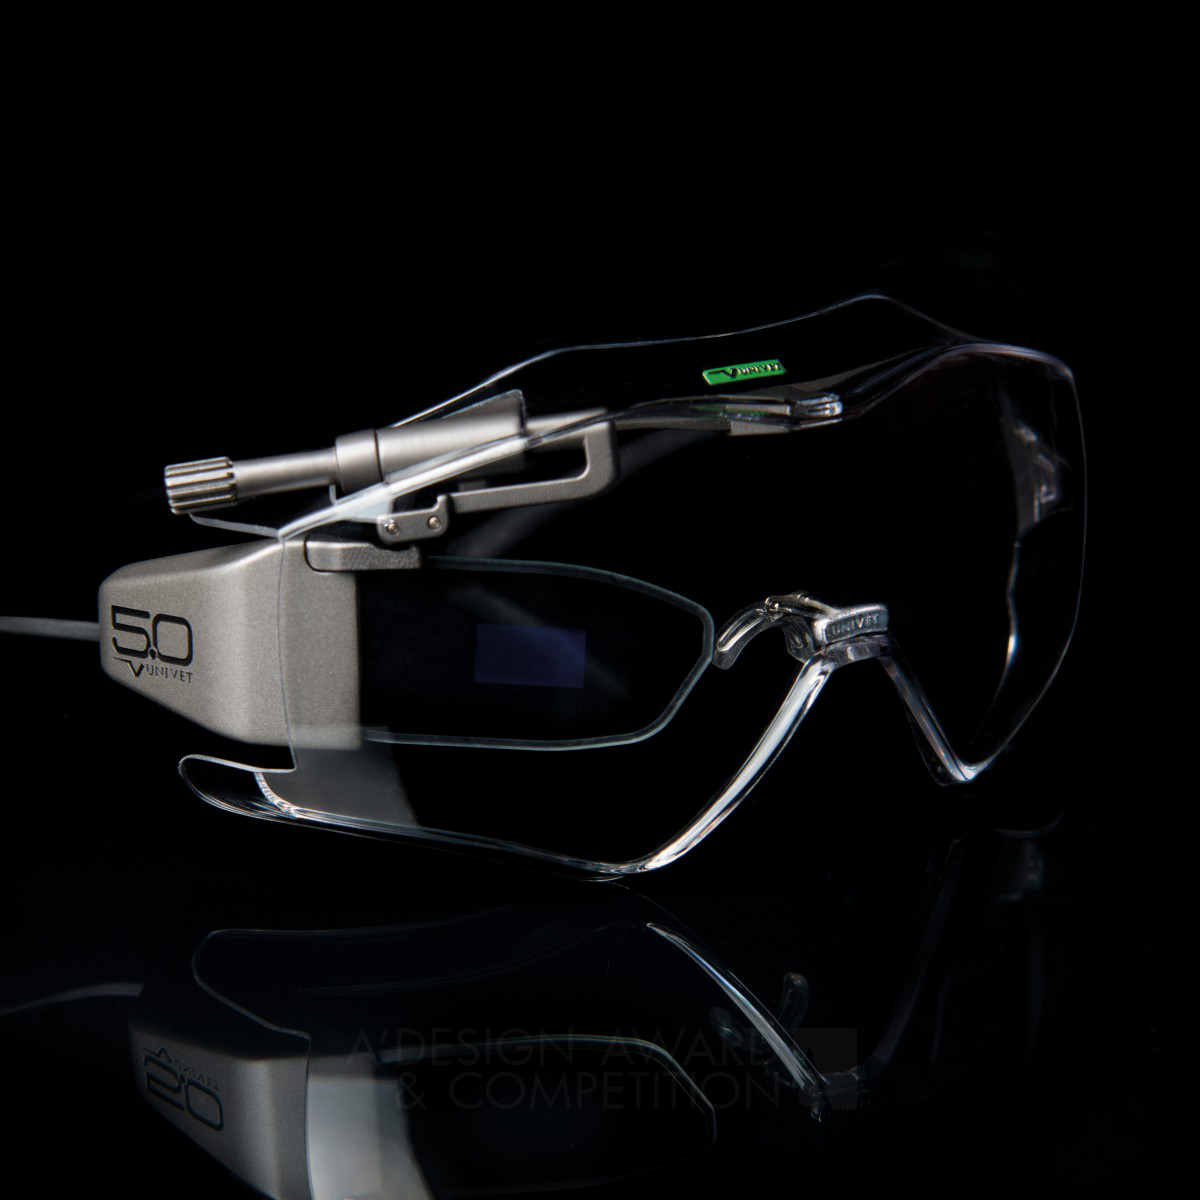 Univet 5.0 safety smart glasses